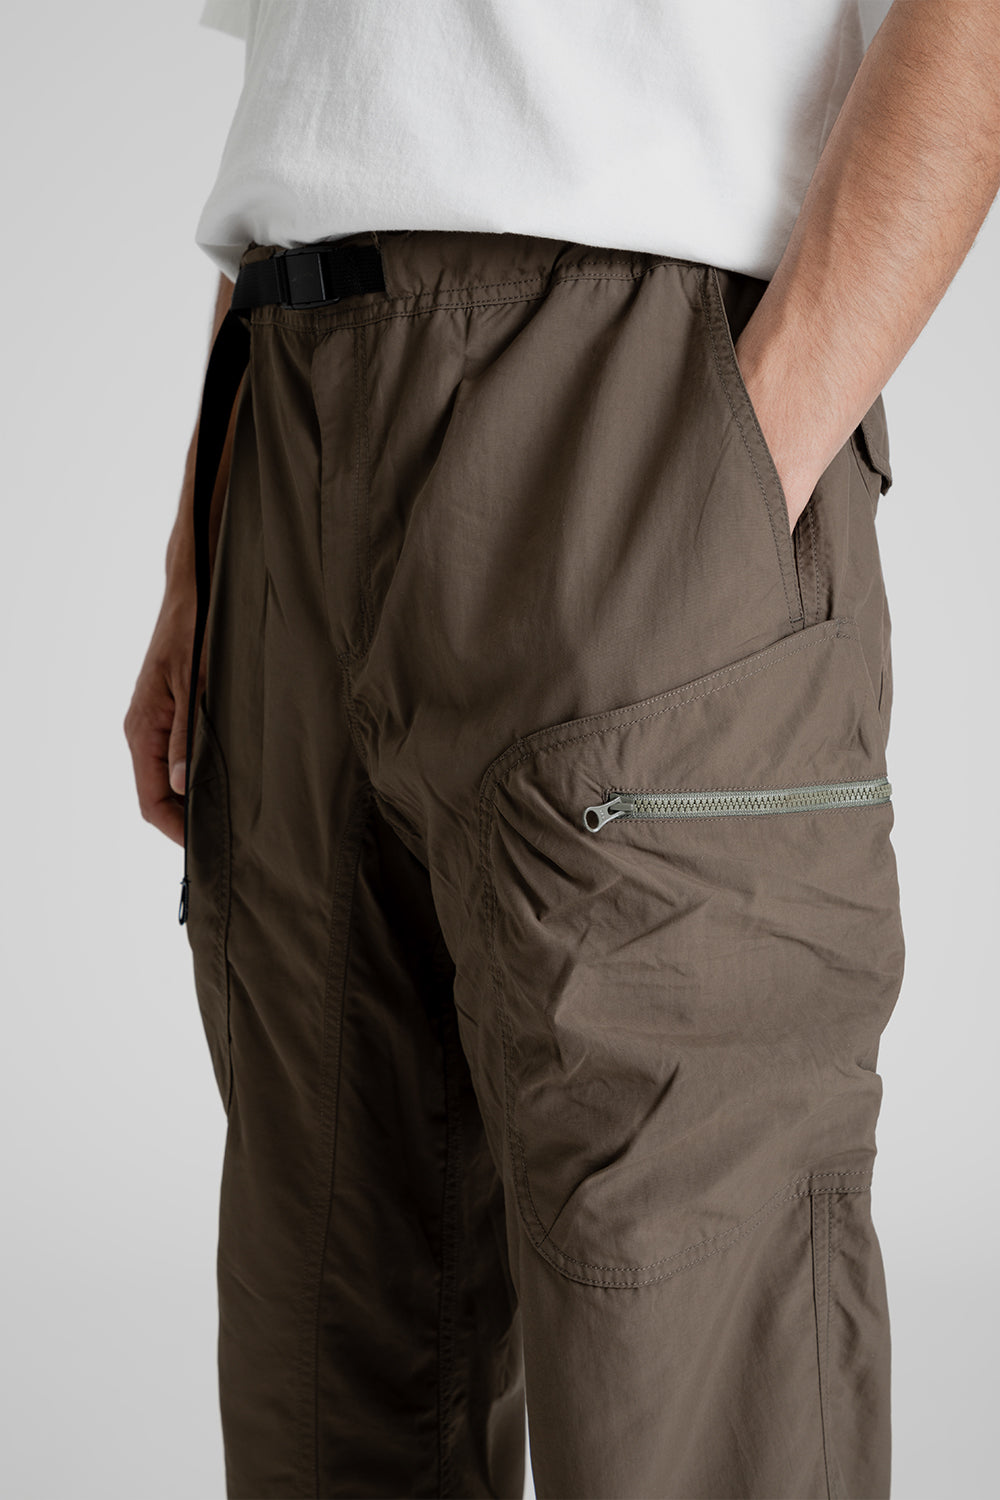 Namu Shop - CAYL Supplex Cargo Pants - Khaki